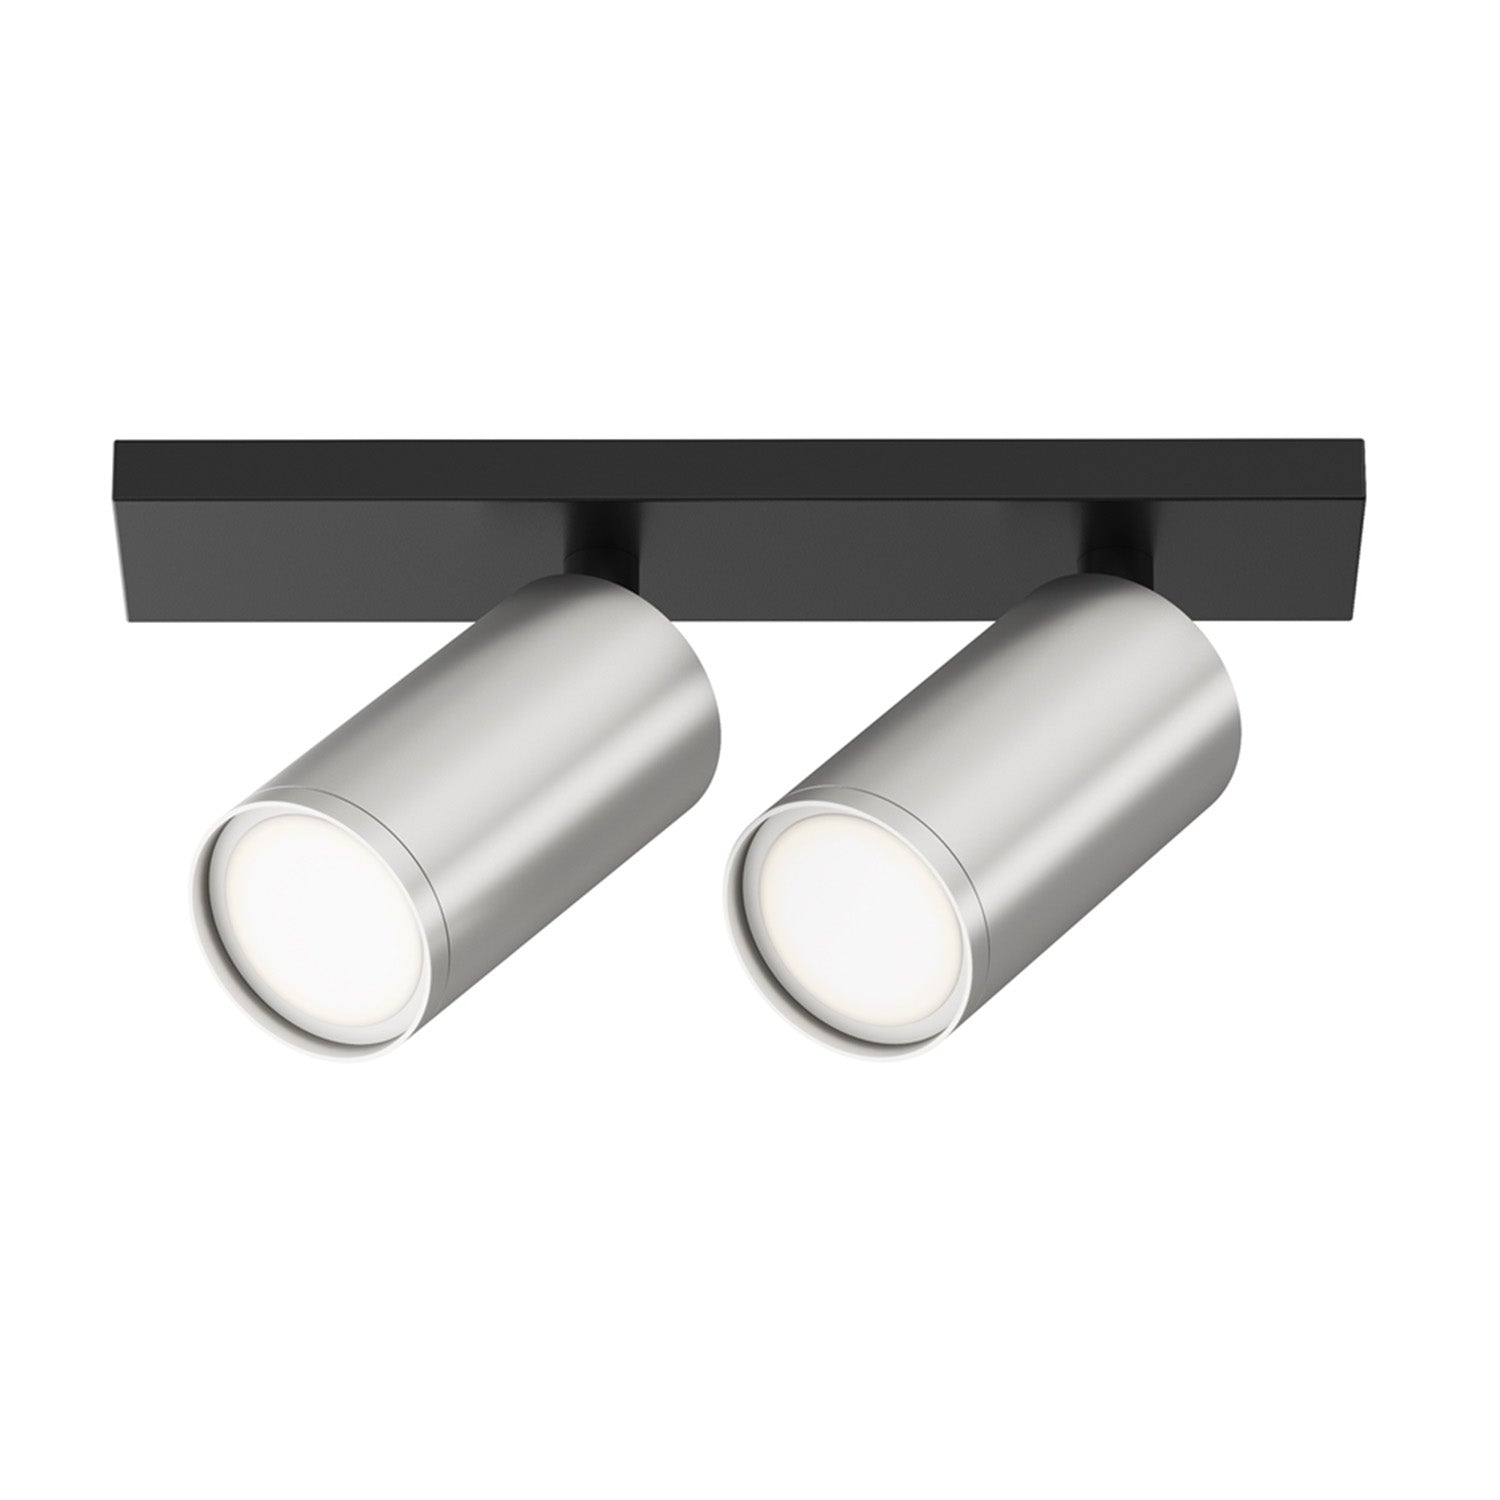 FOCUS S - Double wall mounted spotlight adjustable 90°